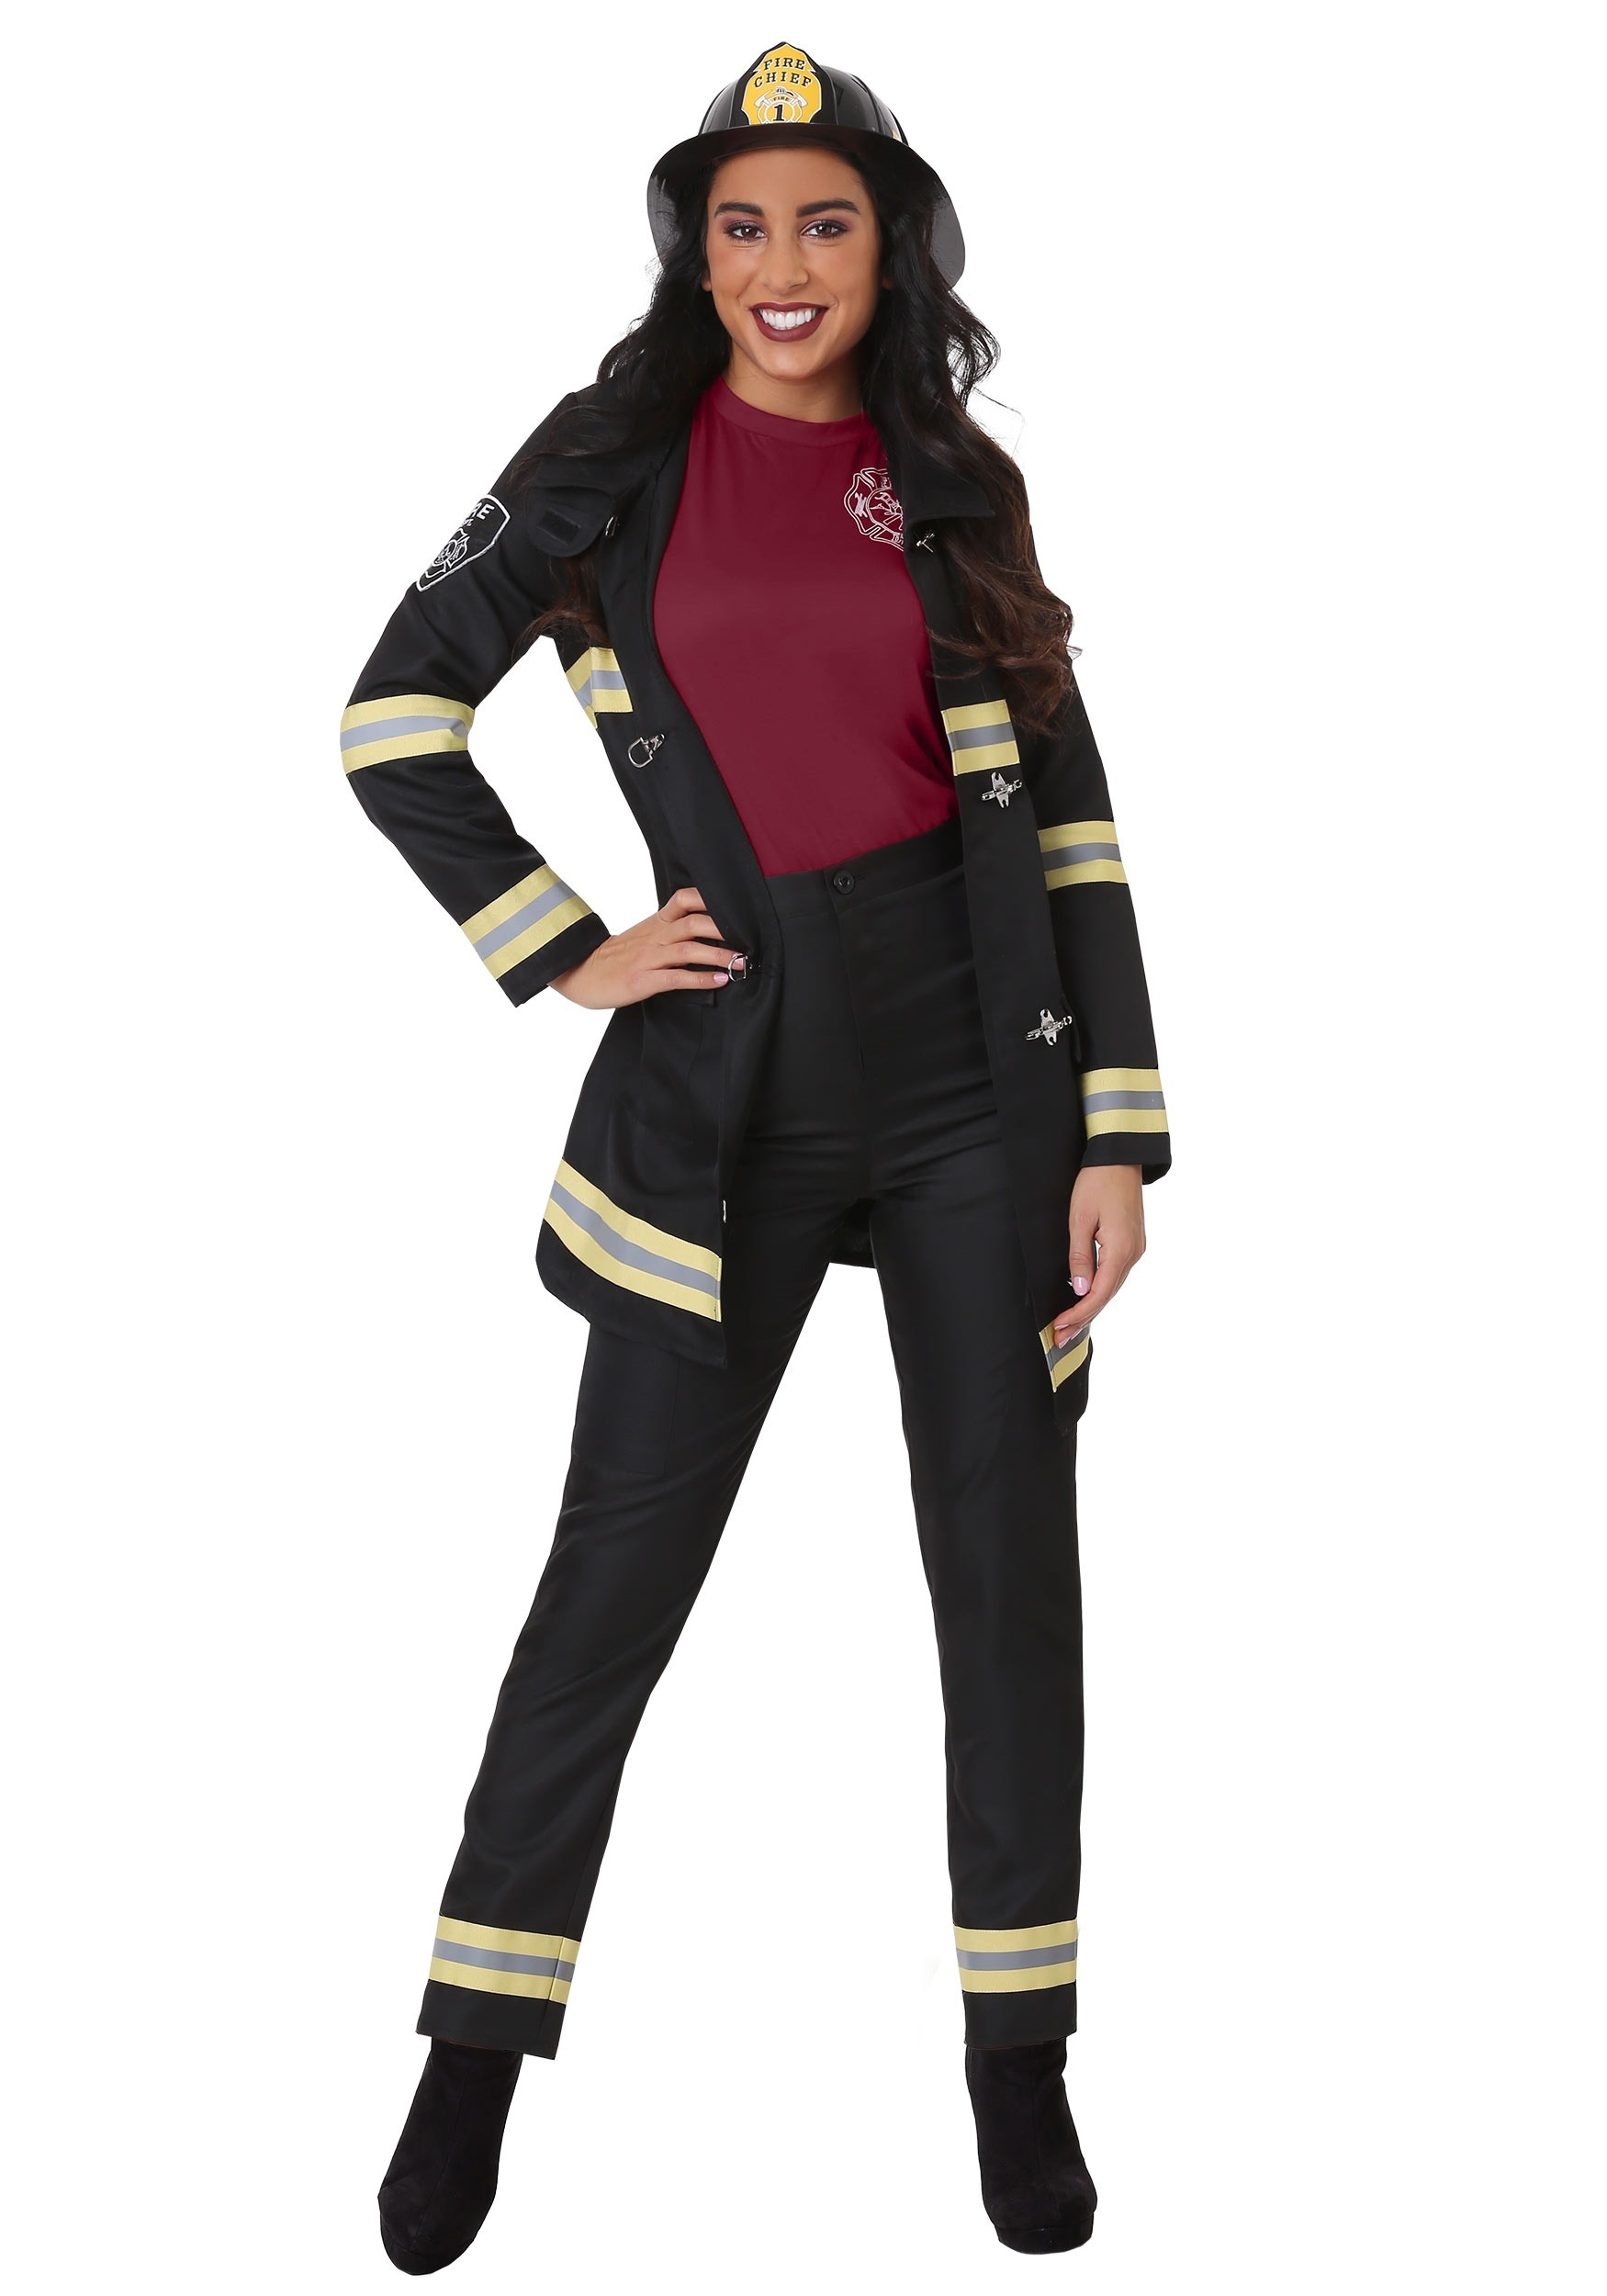 Plus Size Black Firefighter Costume for Women